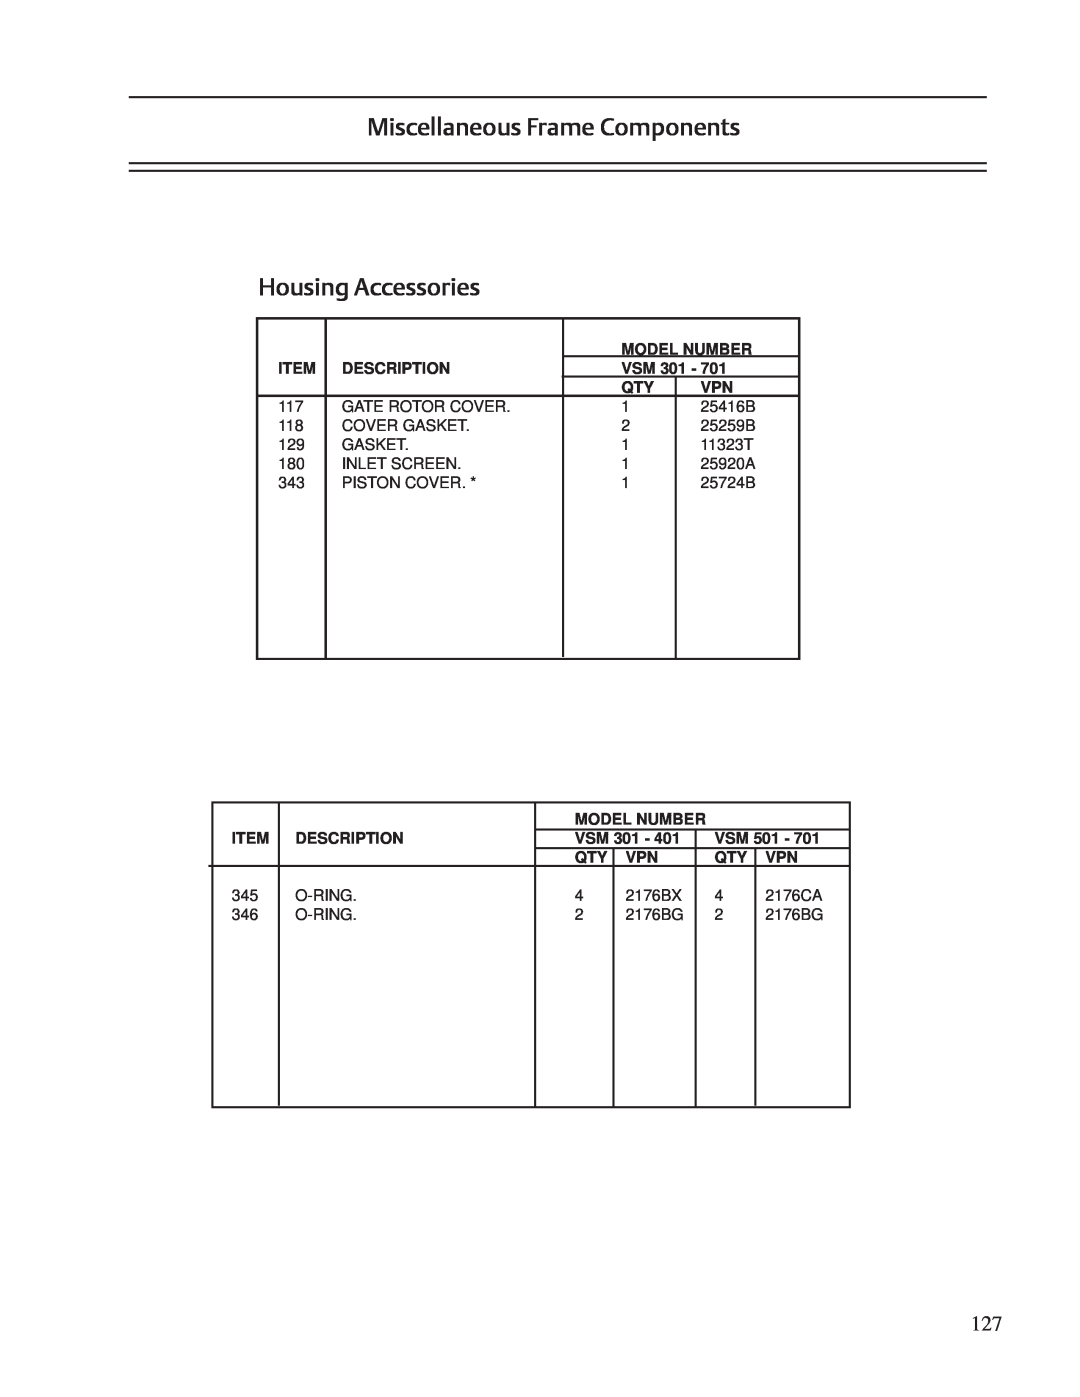 Emerson VSR, VSS Housing Accessories, Miscellaneous Frame Components, Description, Model Number, VSM 301, VSM 501 